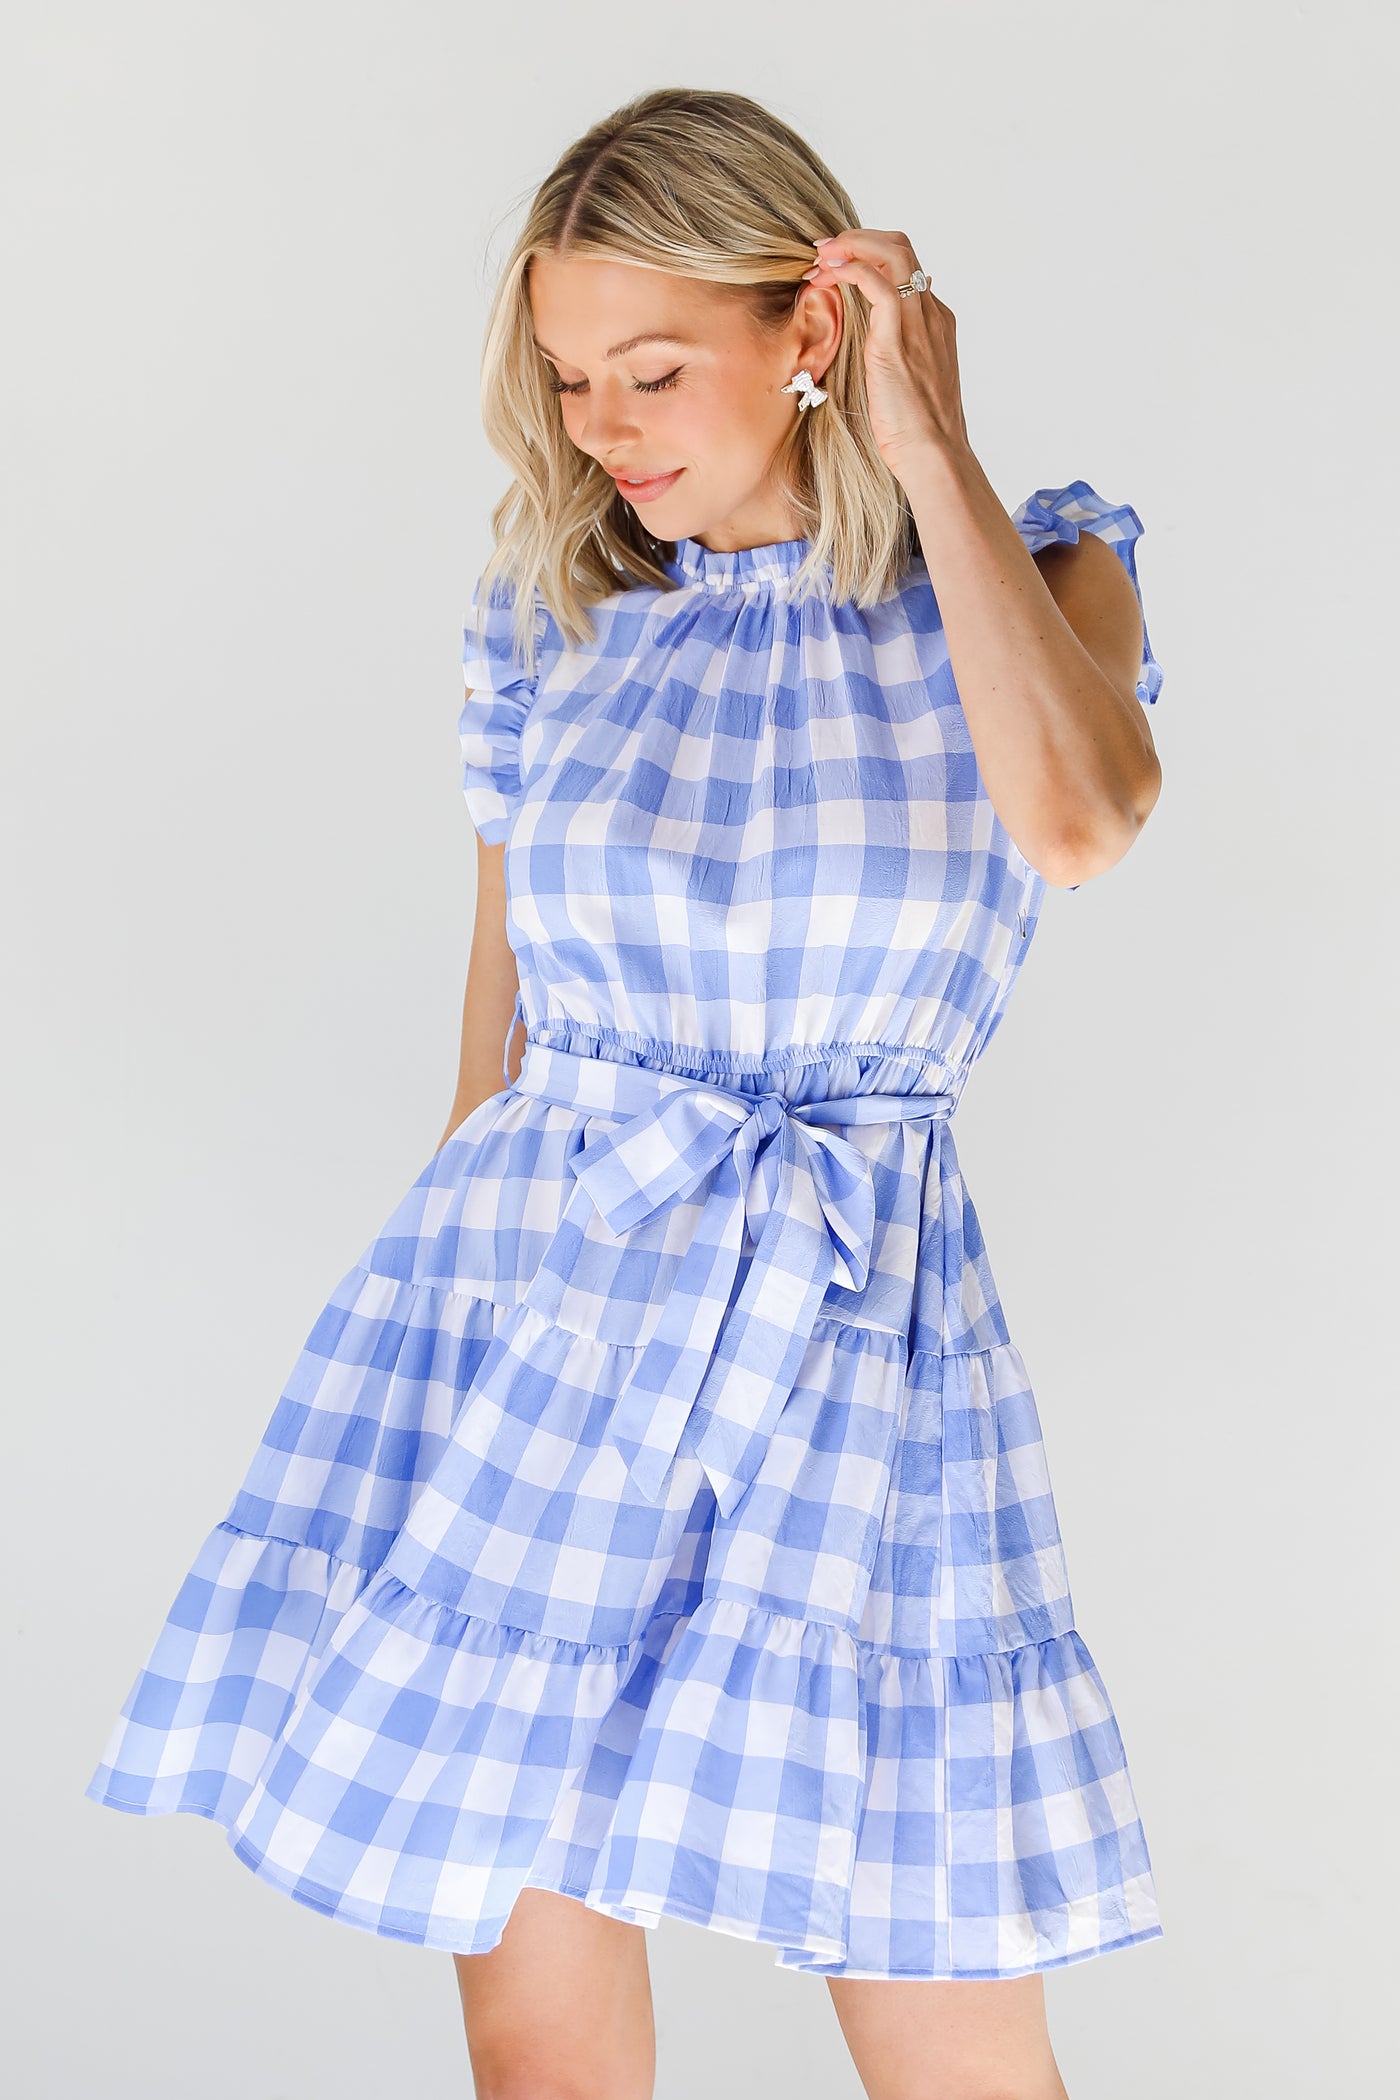 blue Gingham Mini Dress on dress up model